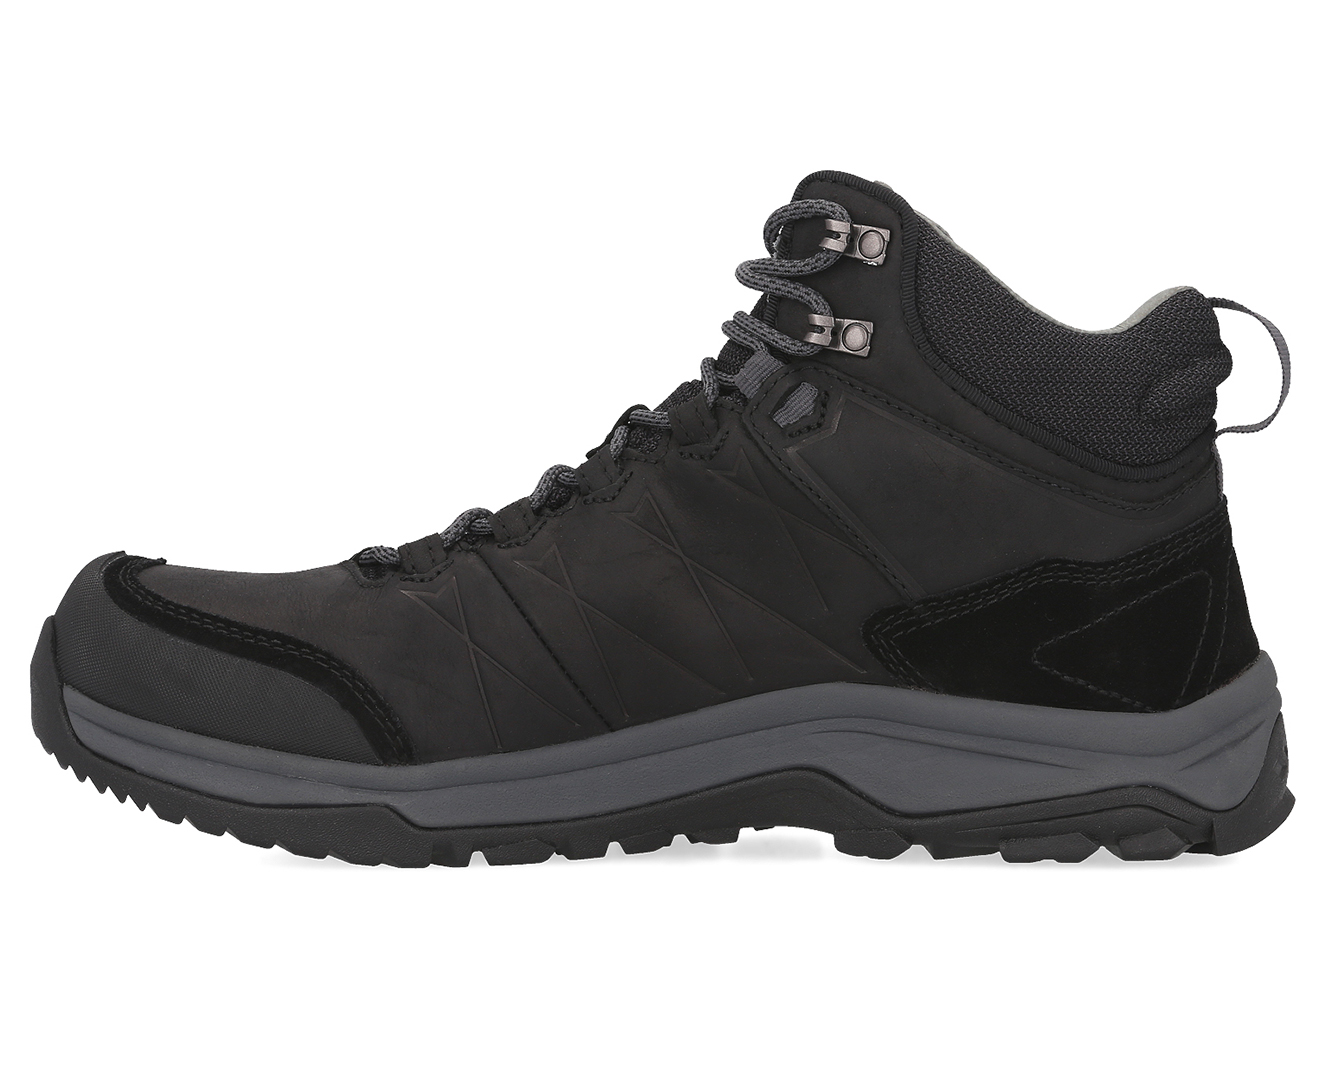 Teva Men's Arrowood Riva Mid Waterproof Hiking Boots - Black | Catch.com.au